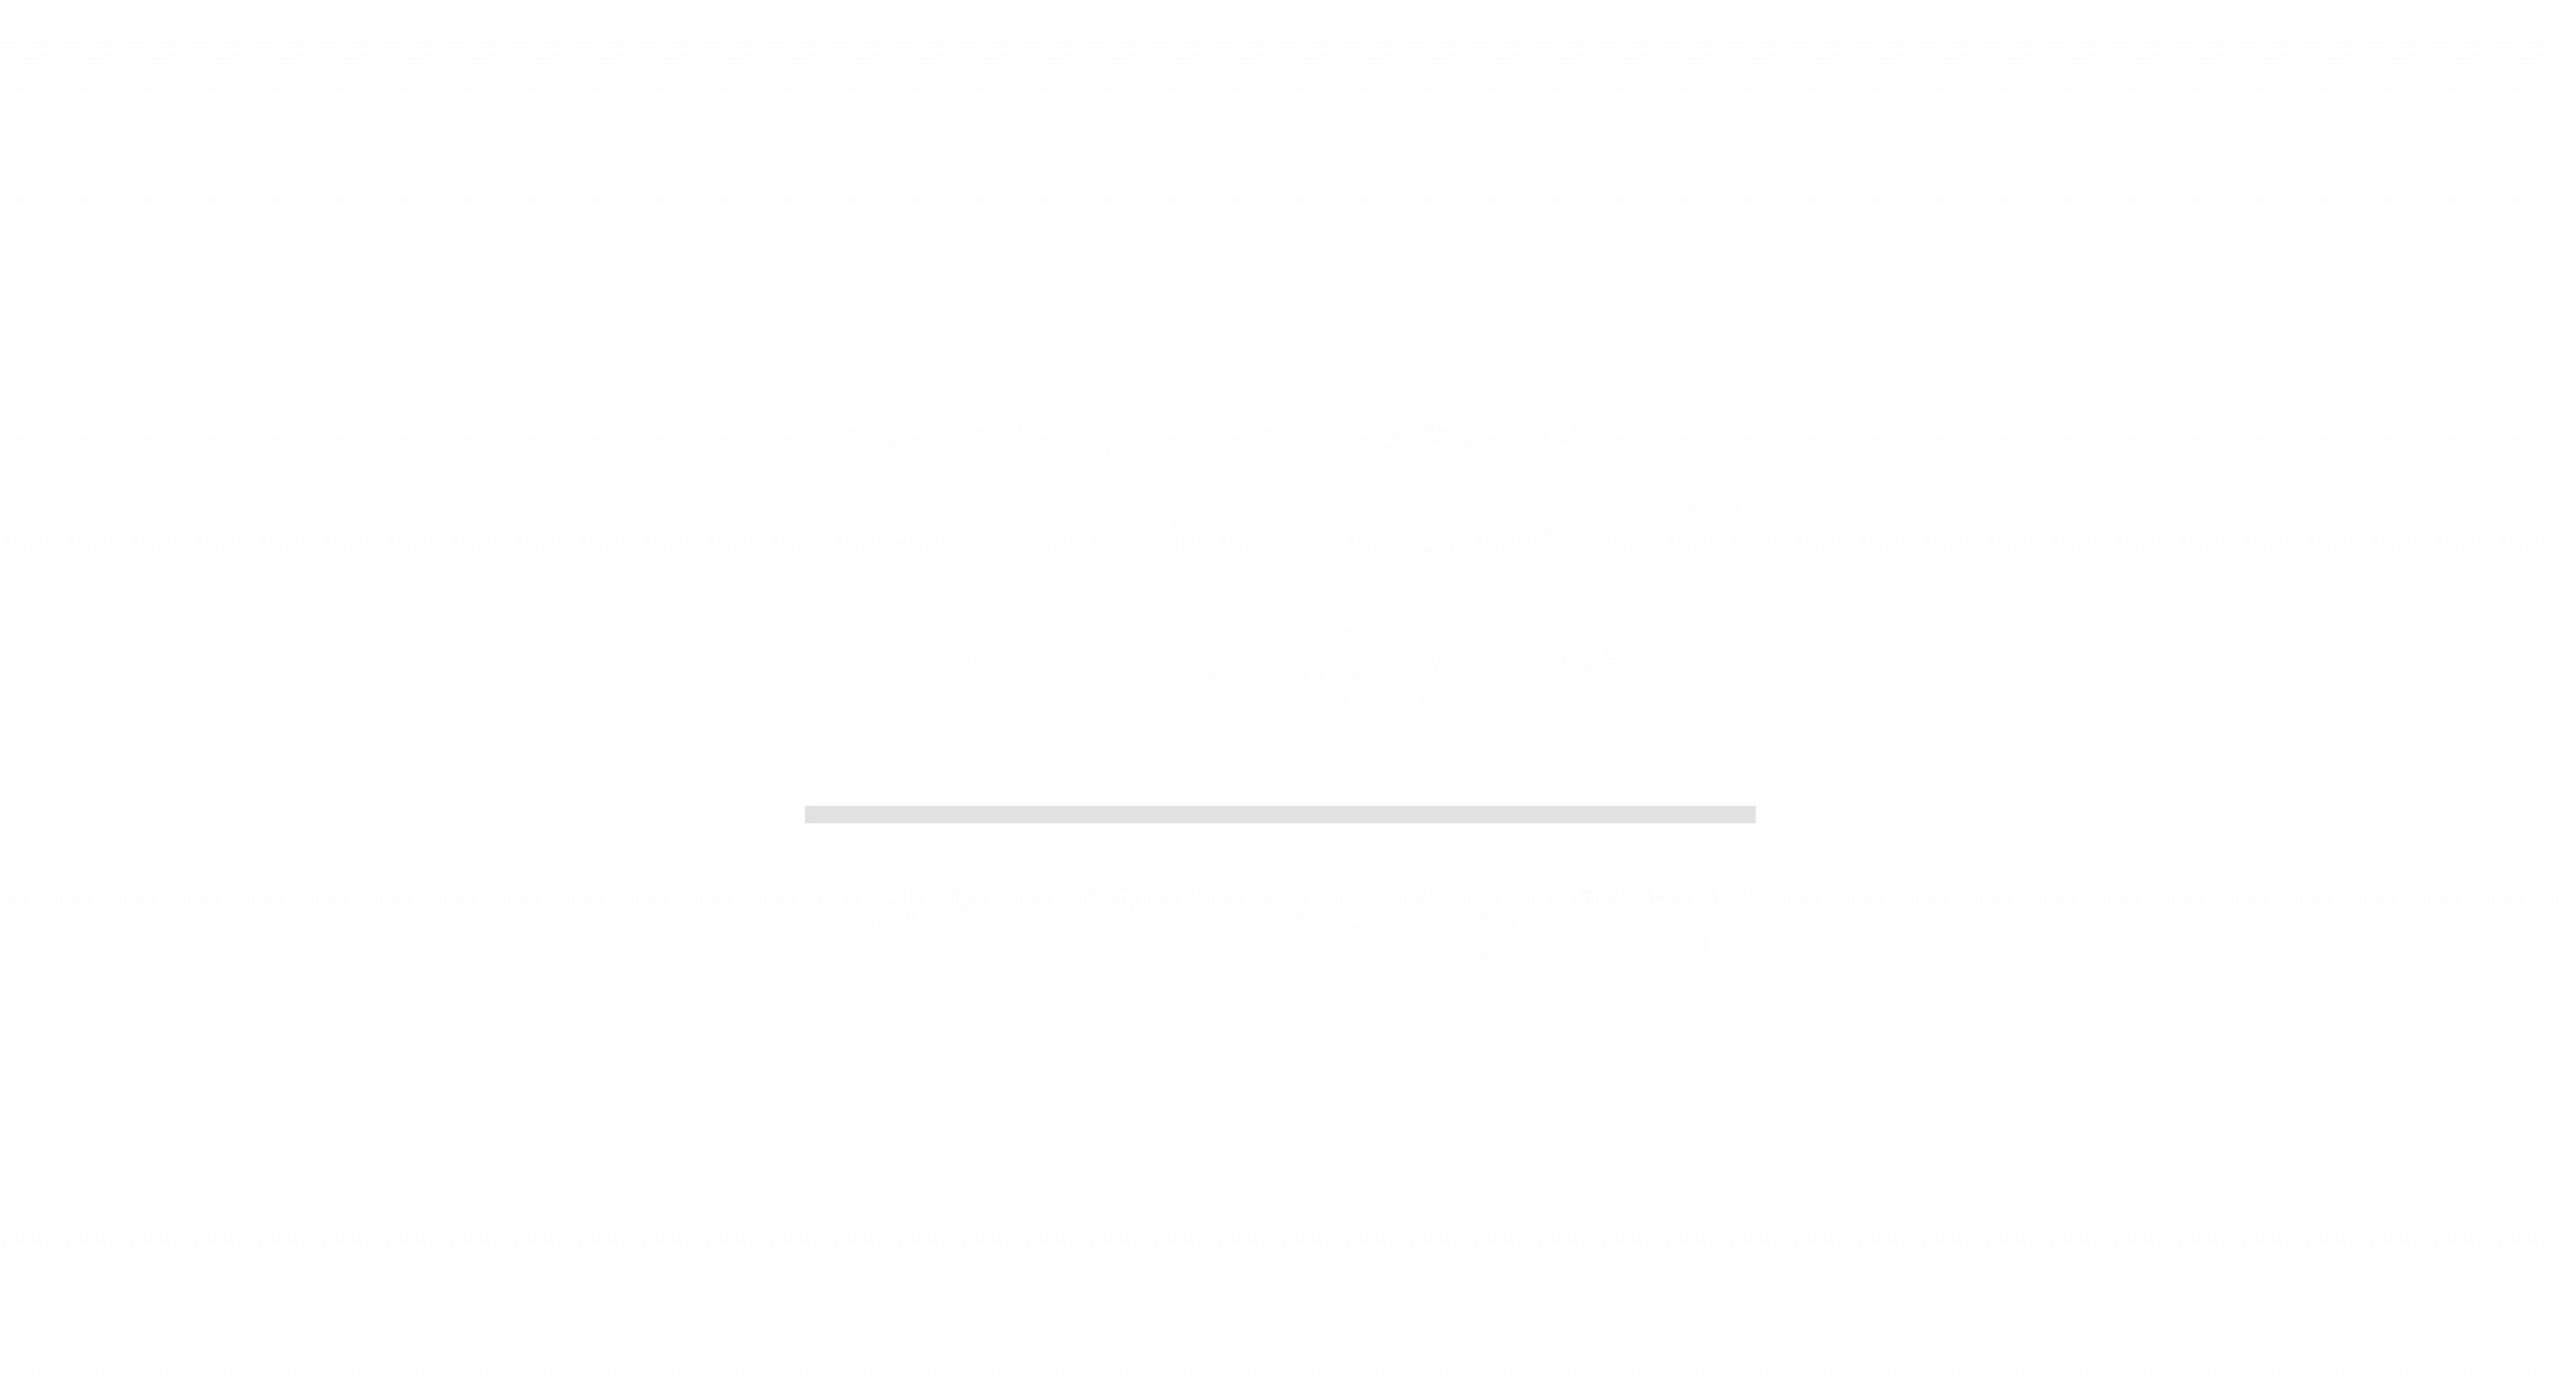 Rebecca Murray - Tax Barrister - By Peek Creative Limited